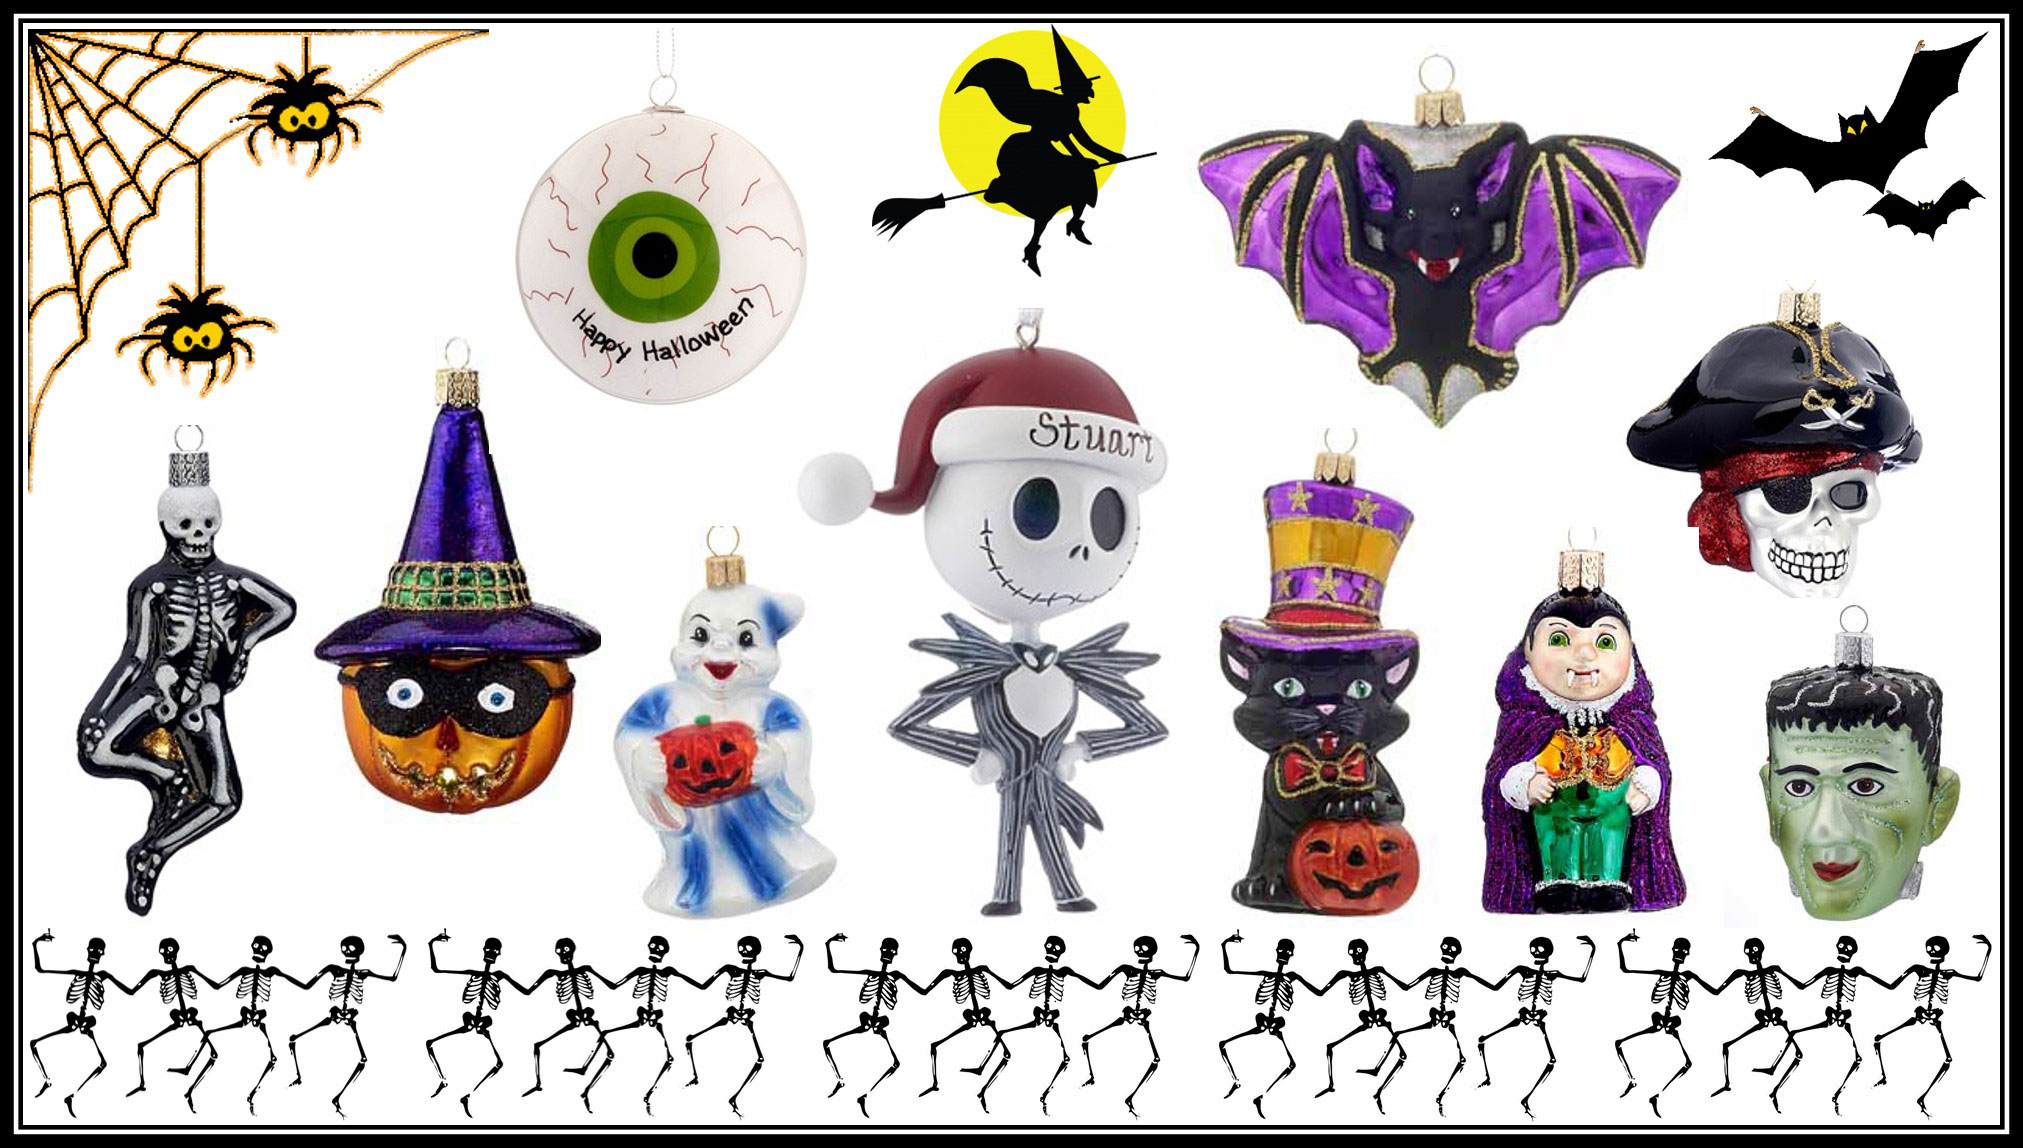 Nightmare Before Christmas Ornaments & other Halloween Ornaments you can buy at OrnamentShop.com | OrnamentShop.com